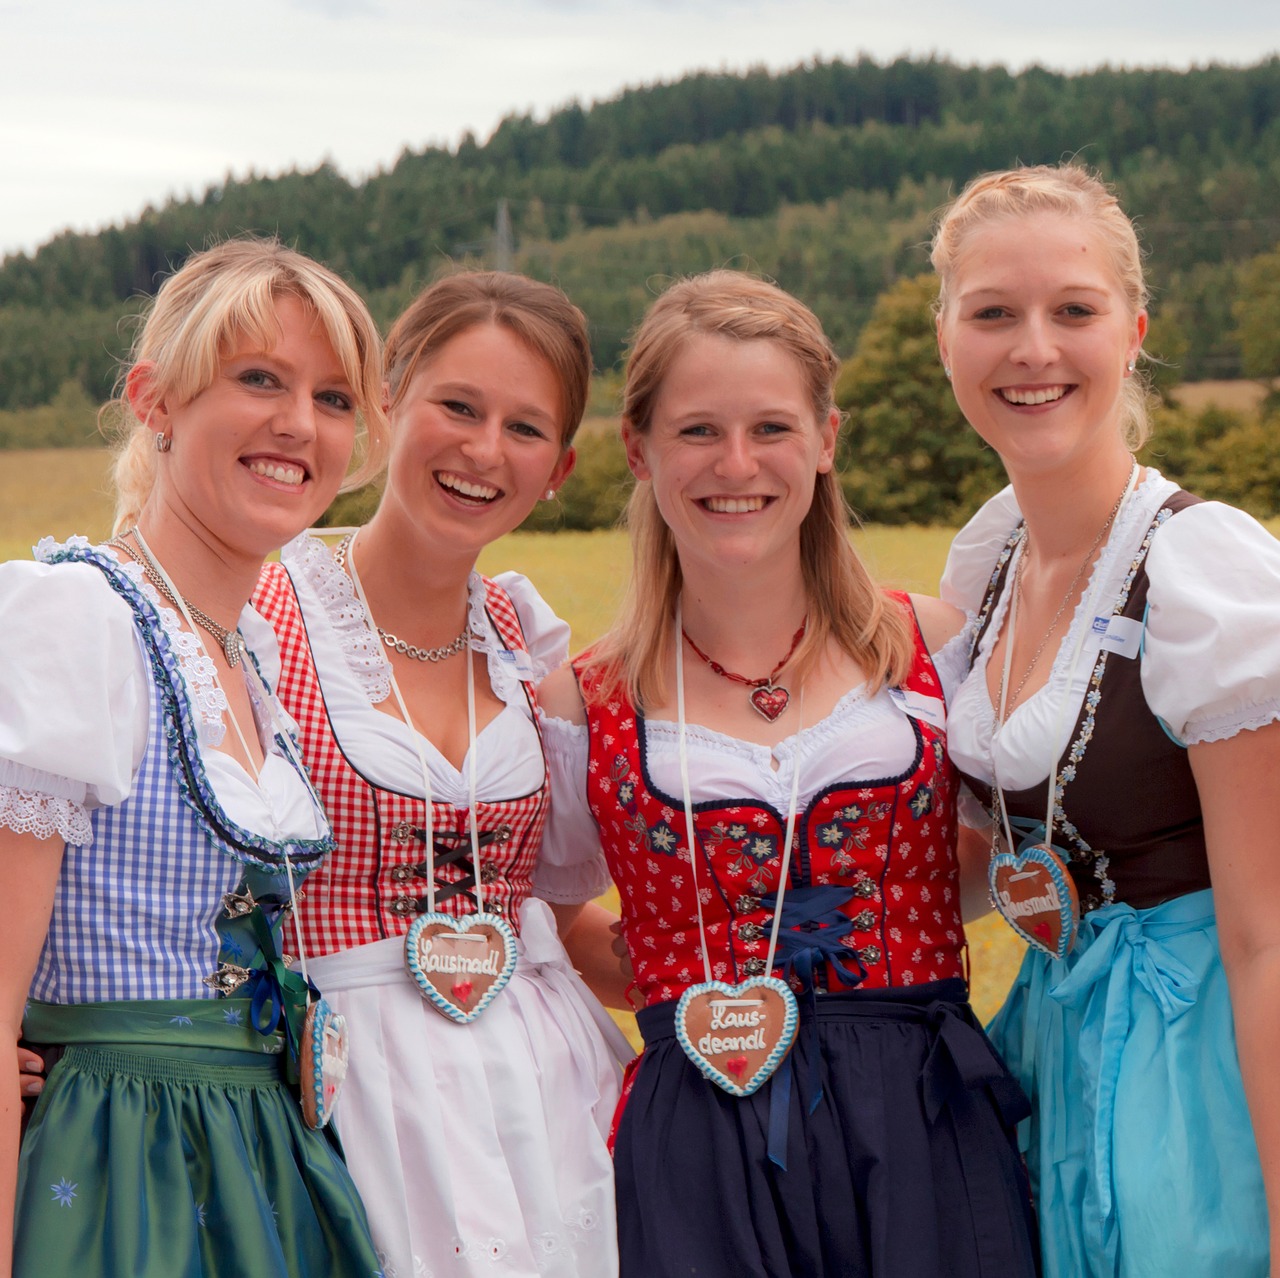 Dirndl, girlfriends, costume, oktoberfest, bavaria - free image from needpix.com